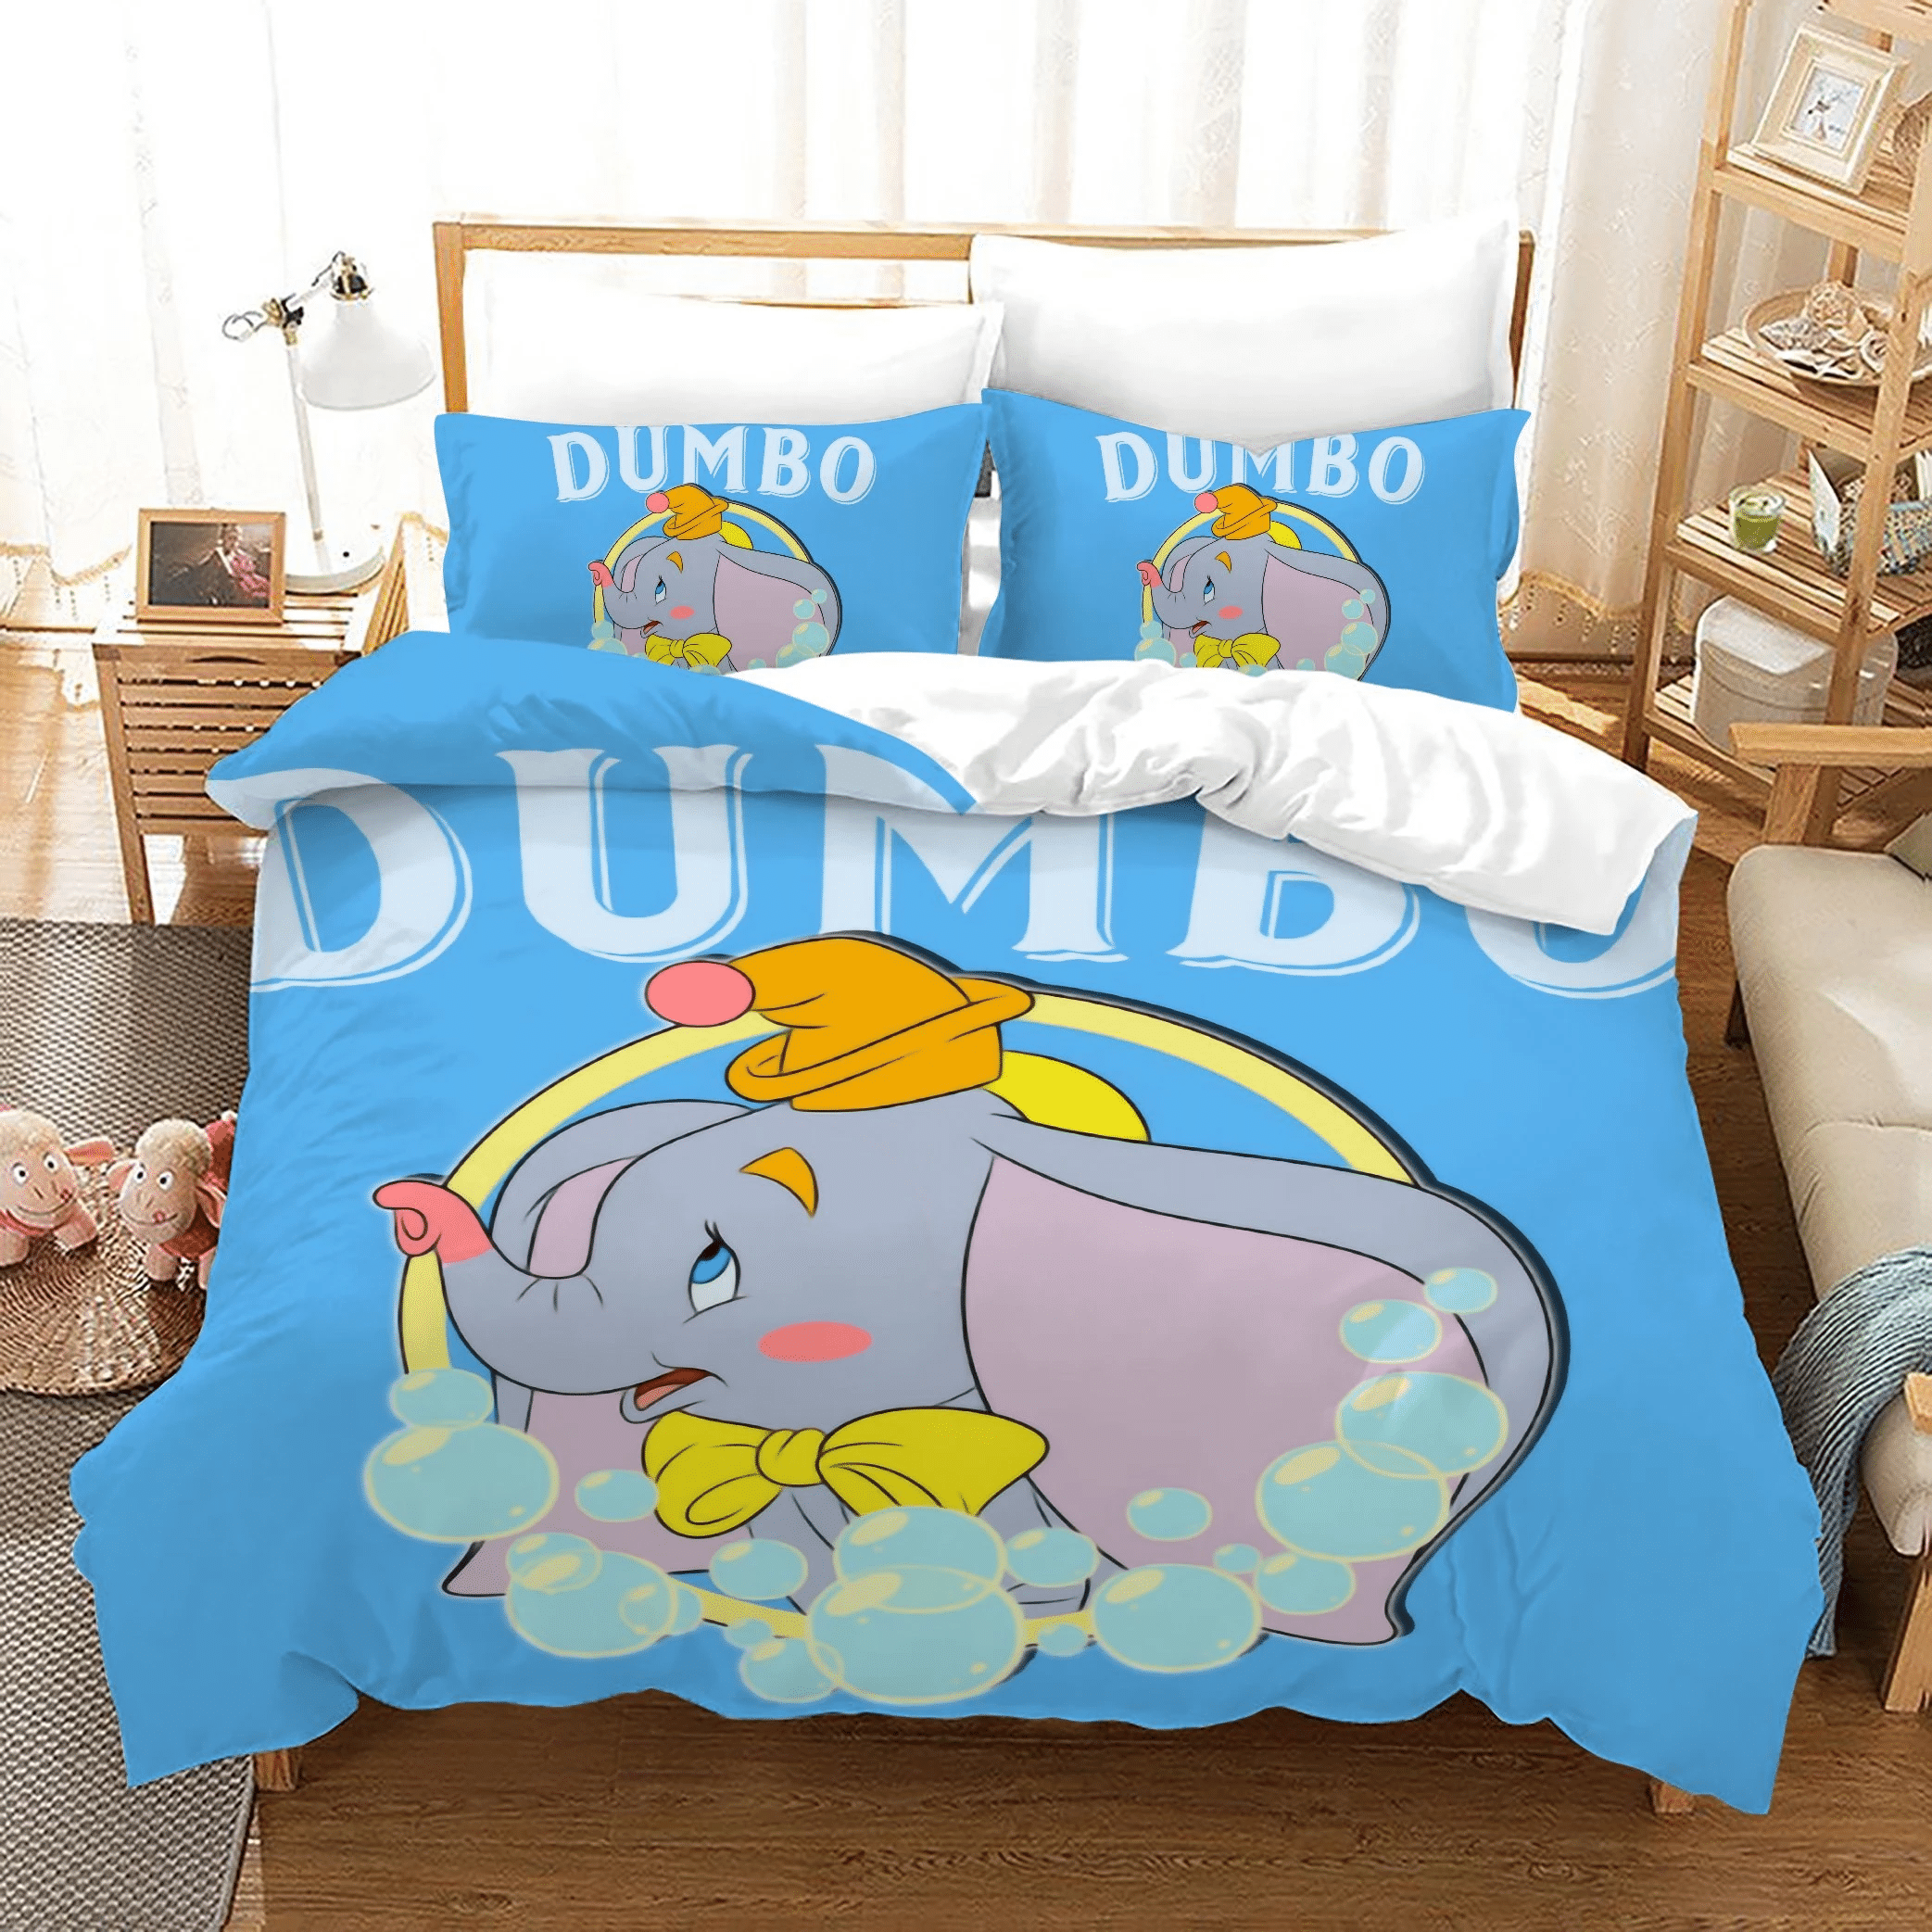 Dumbo 7 Duvet Cover Quilt Cover Pillowcase Bedding Sets Bed